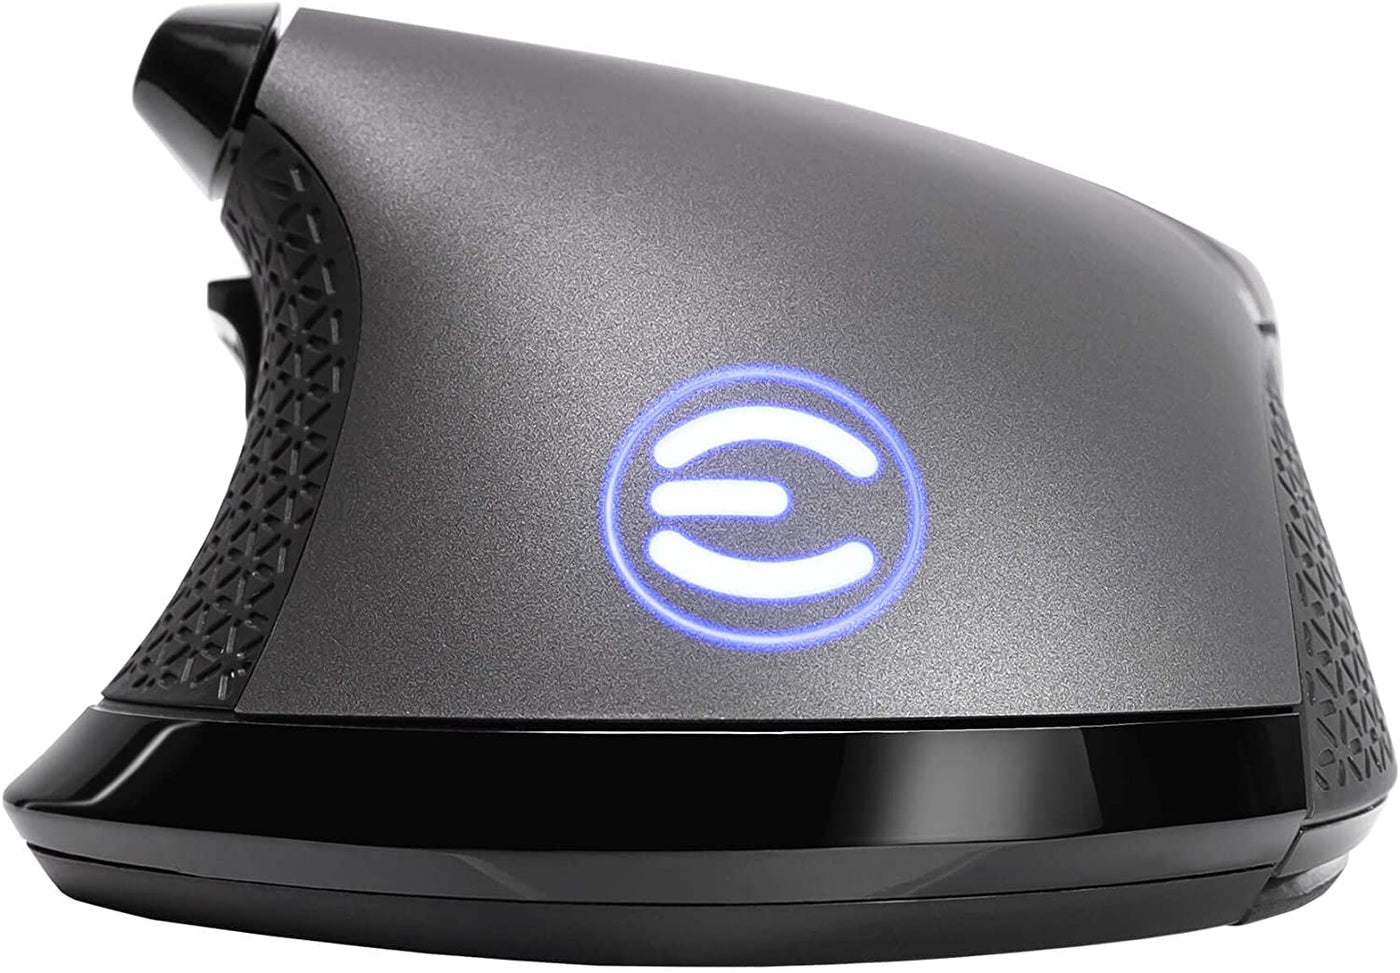 EVGA X20 Wireless Gaming Mouse, Wireless, Grey, Customizable, 16,000 DPI, 5 Profiles, 10 Buttons, Ergonomic 903-T1-20GR-KR